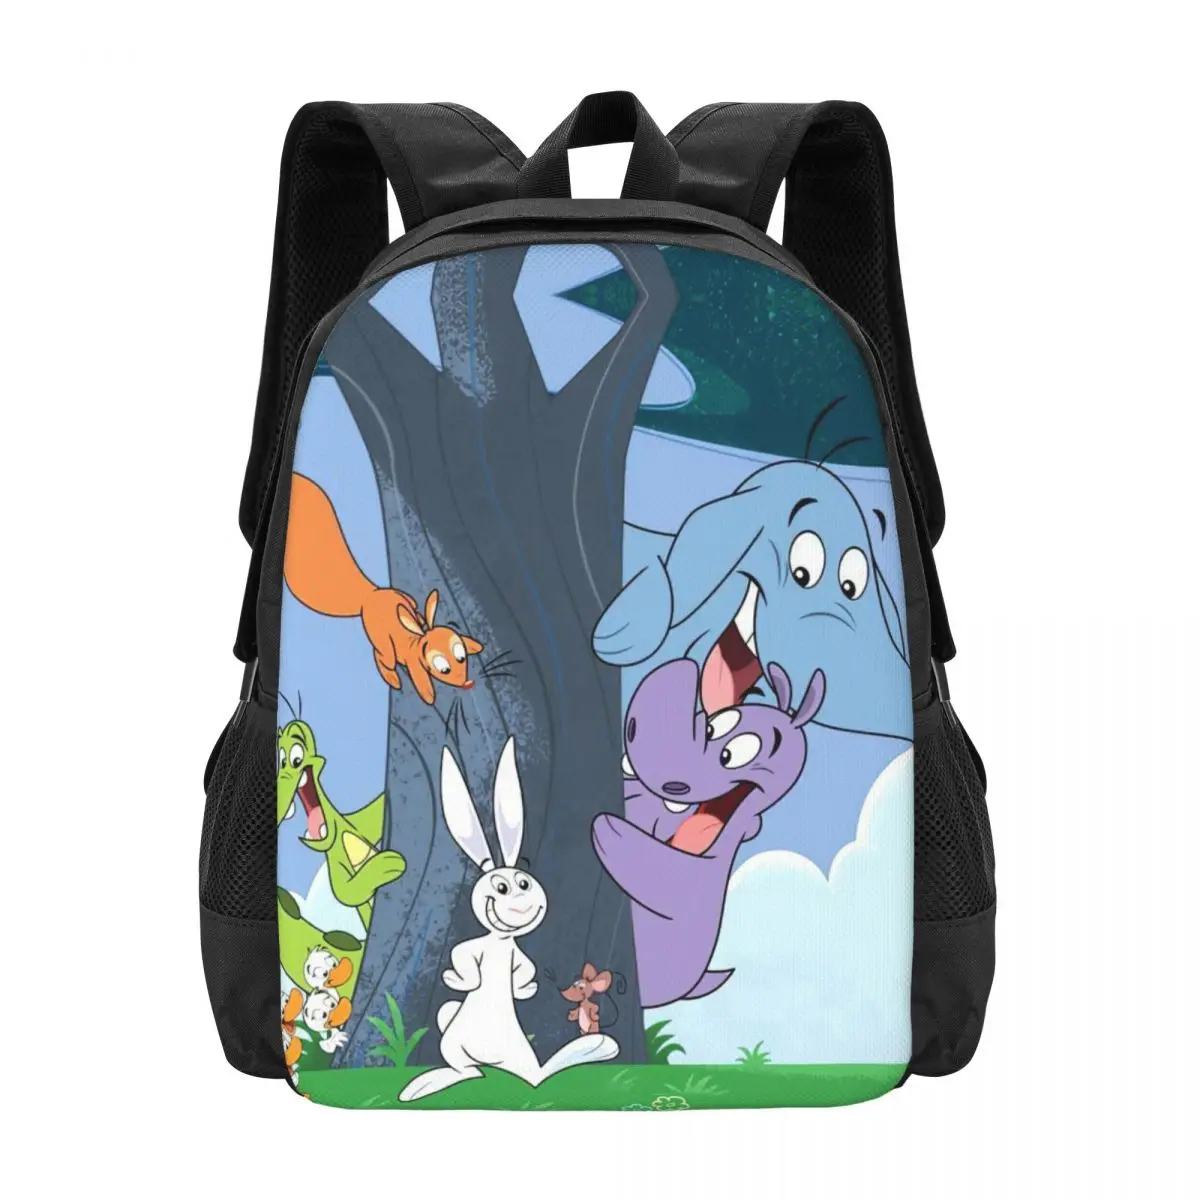 My Friend Rabbit Backpack for Girls Boys Travel RucksackBackpacks for Teenage school bag